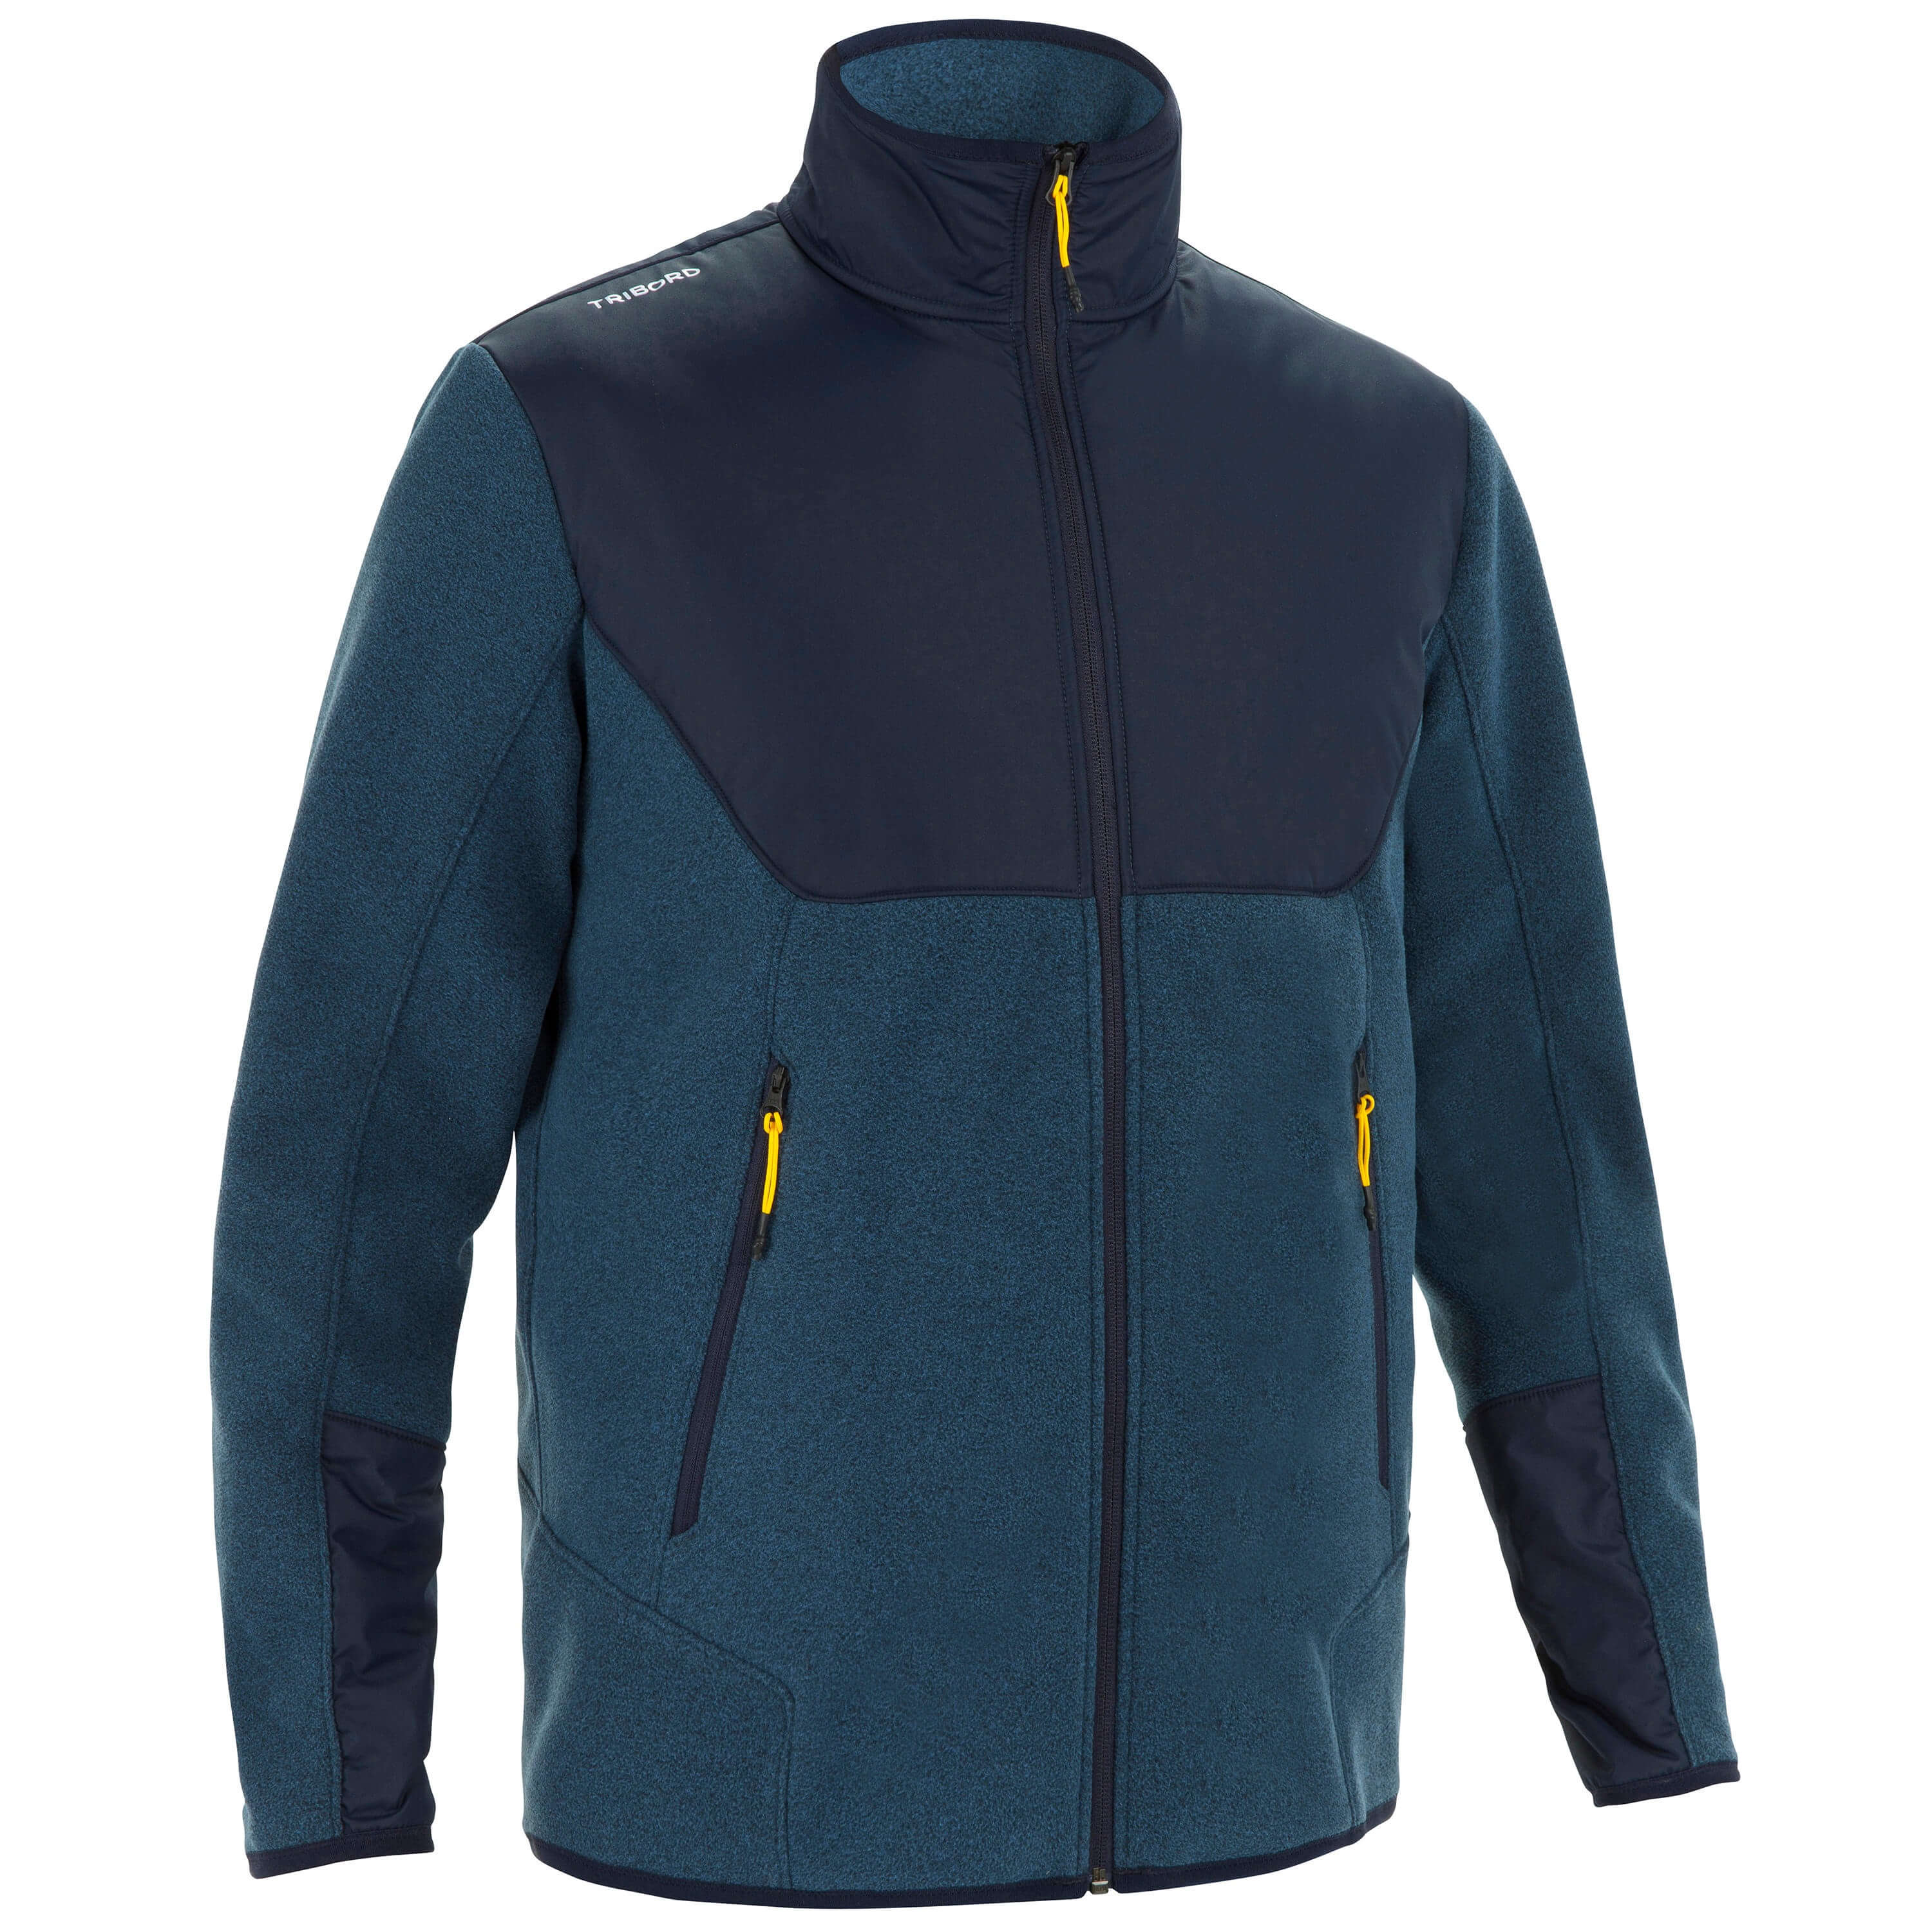 Куртка флисовая парусная мужская 500 Tribord, серо-голубая (Размер S)